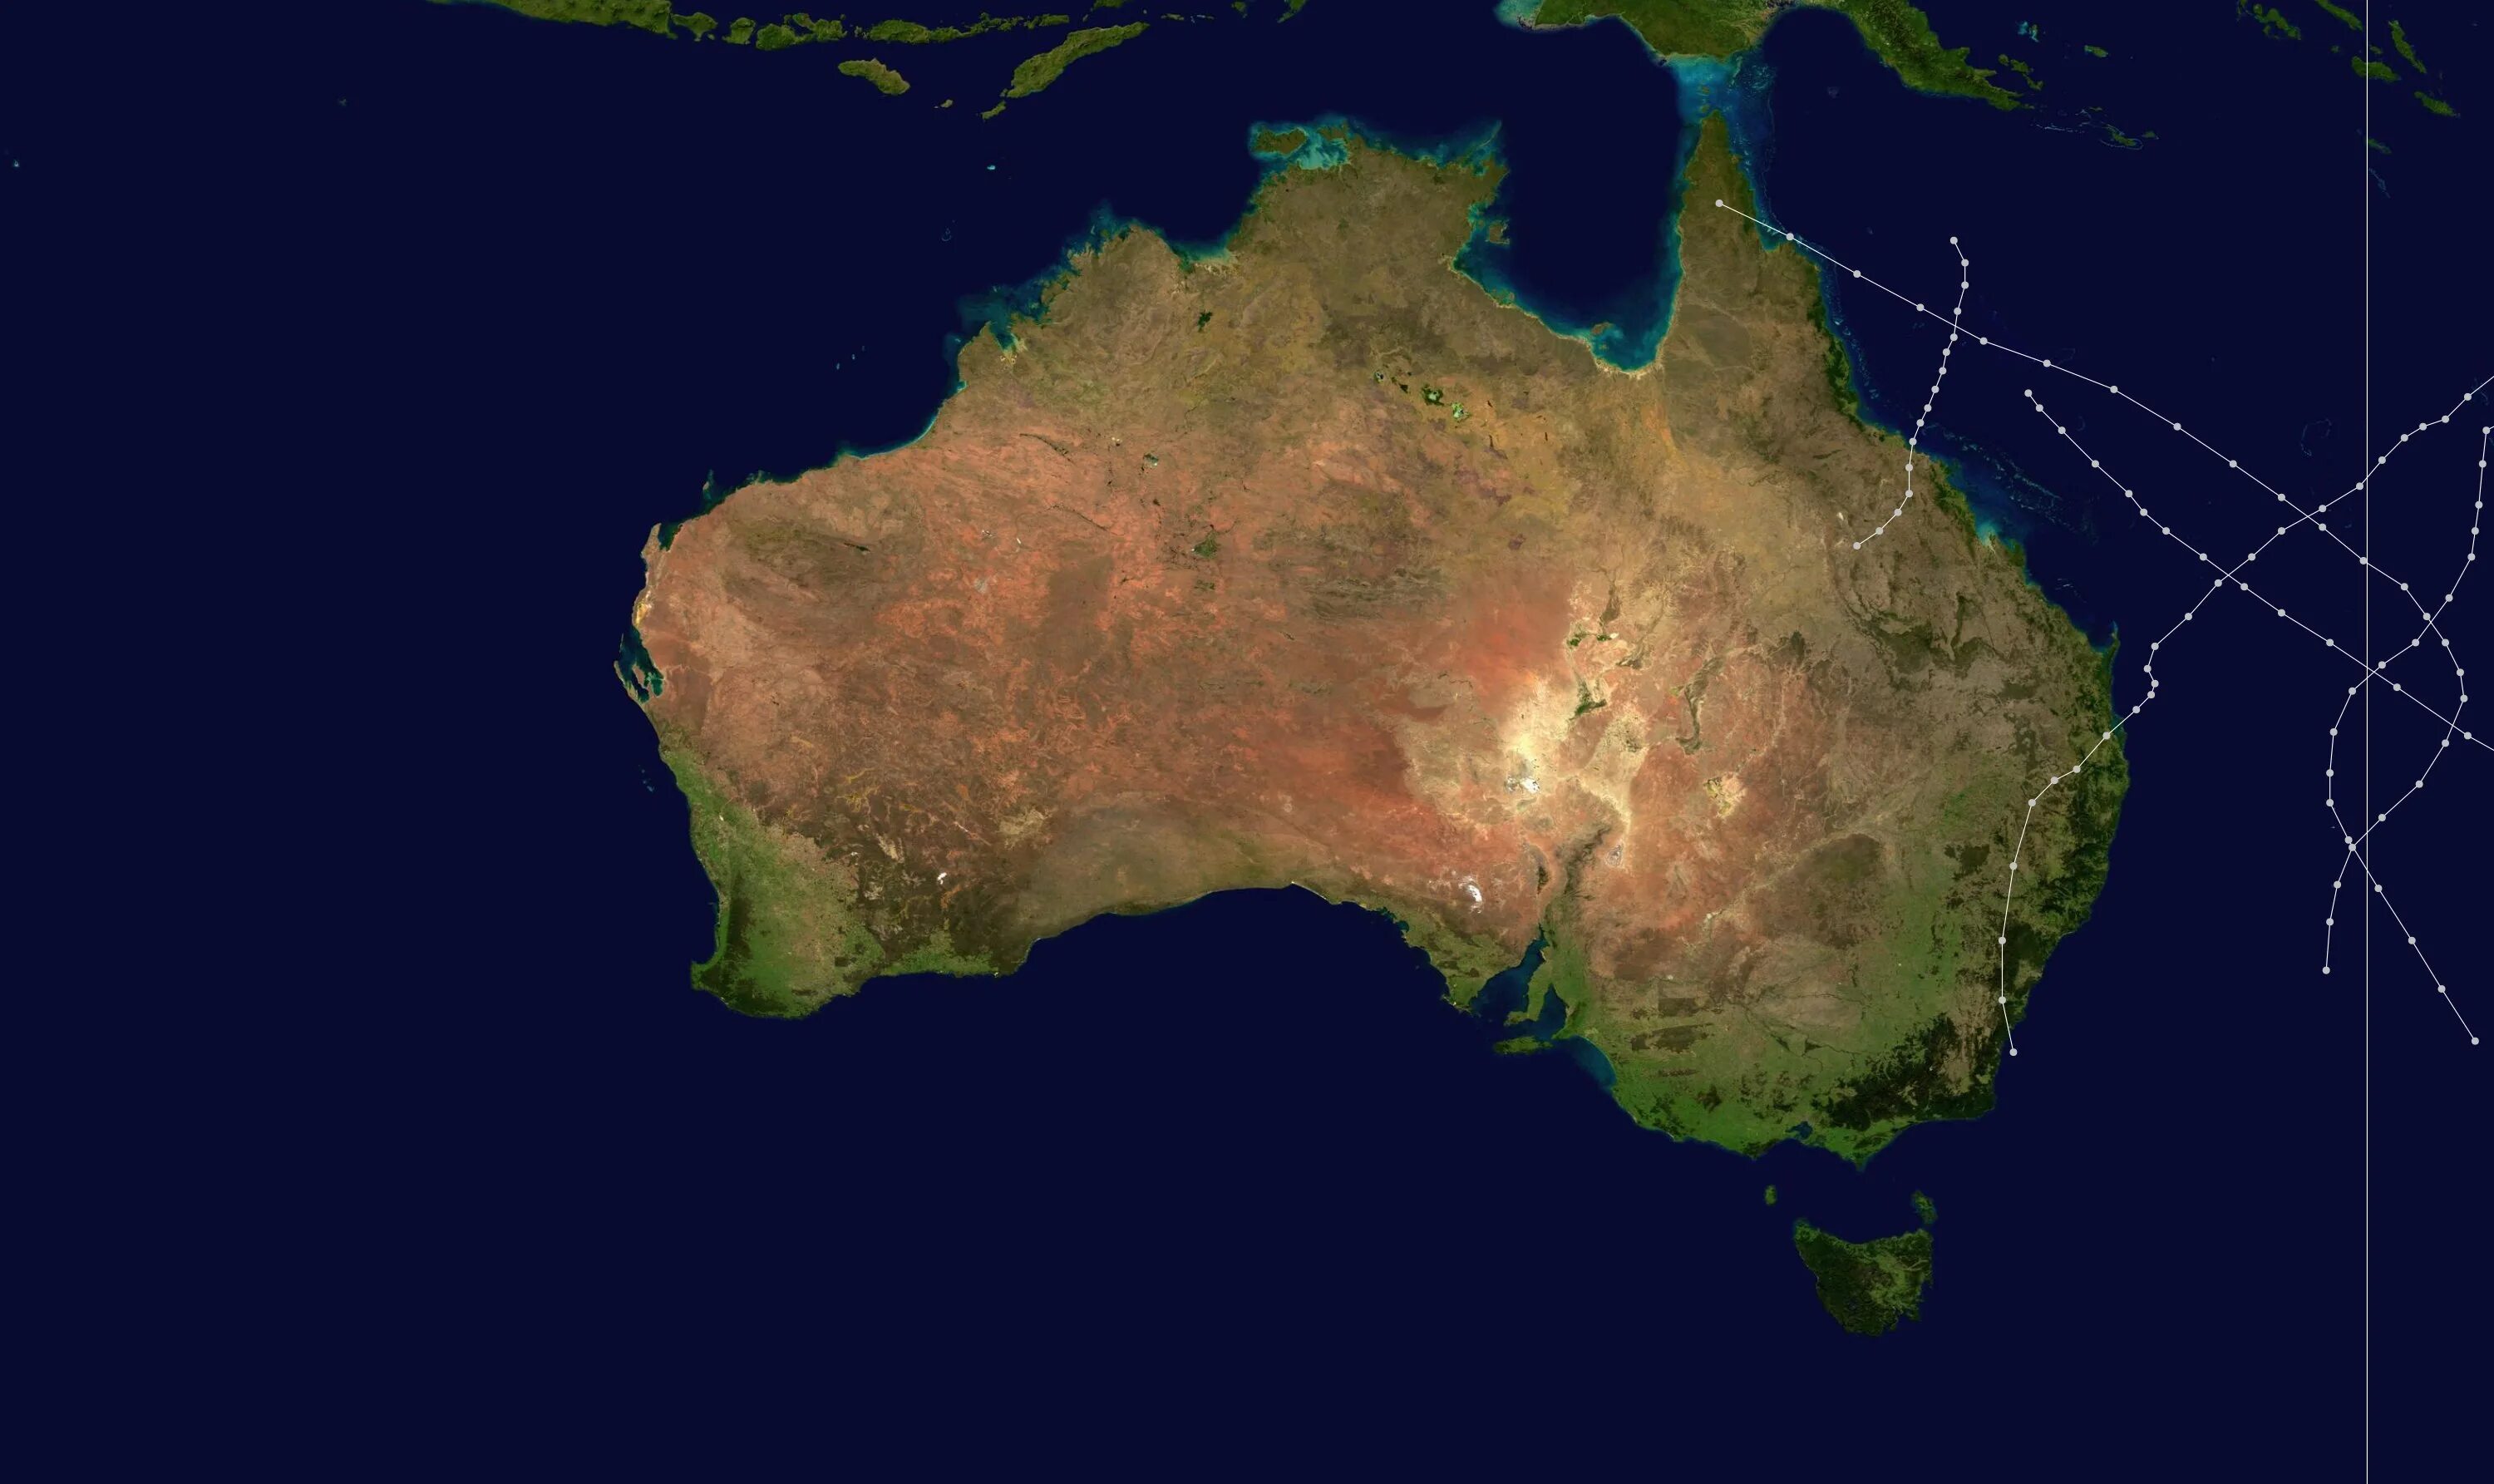 Австралия залив Карпентария. Порт Хедленд Австралия. Австралия материк. Заливы Карпентария и большой австралийский залив.